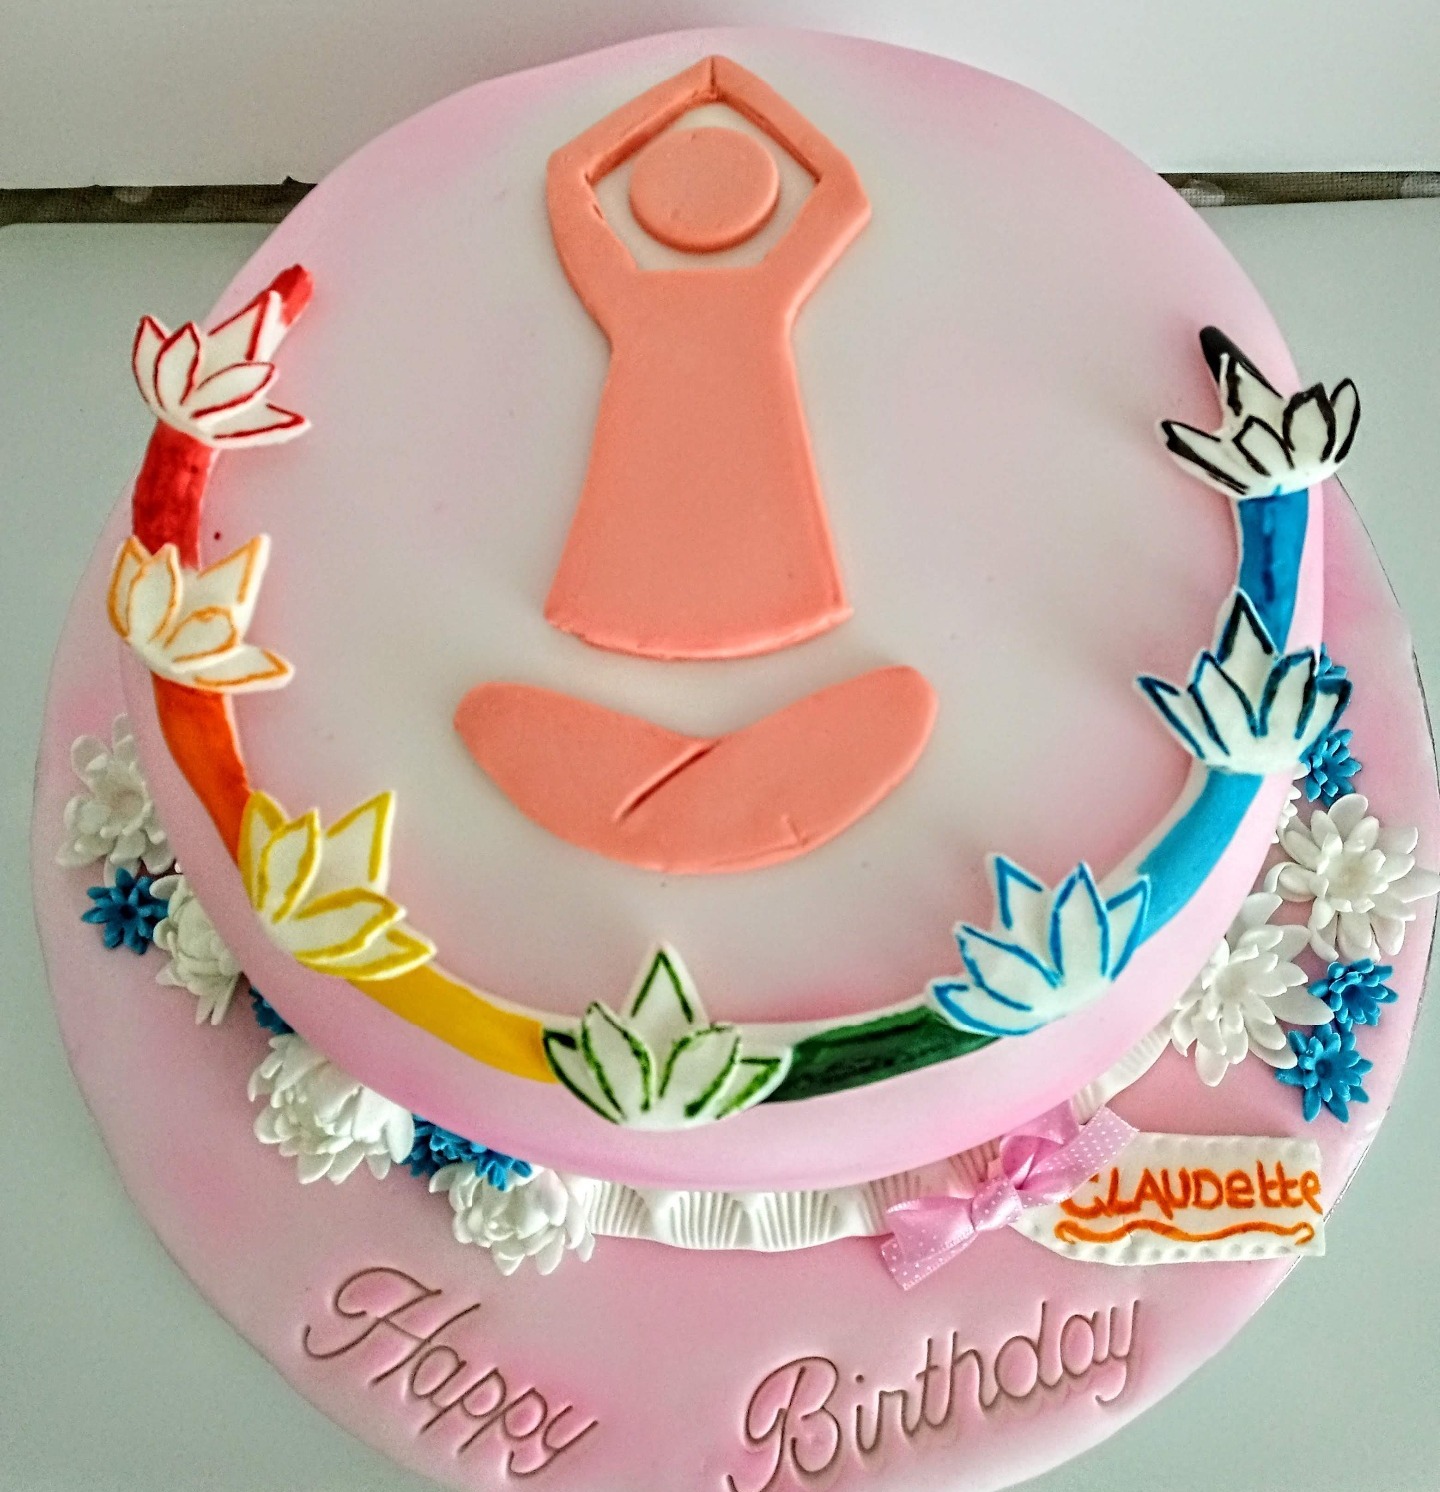 ladies "Yoga" inspired birthday cake